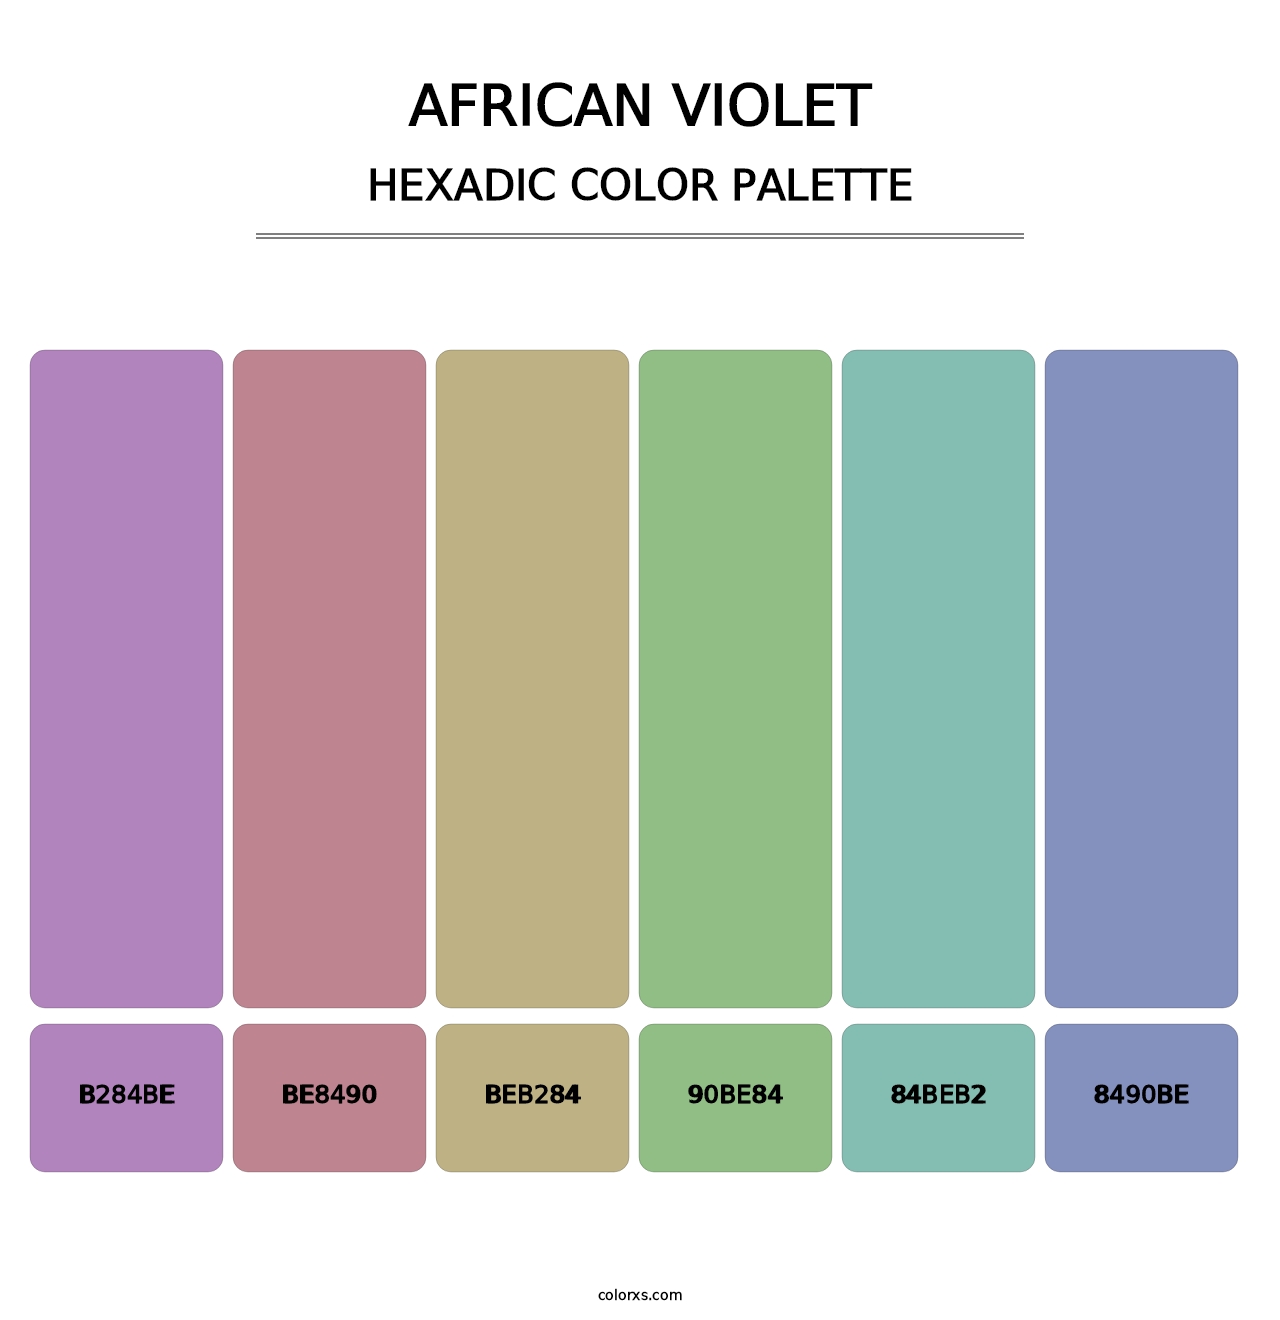 African Violet - Hexadic Color Palette